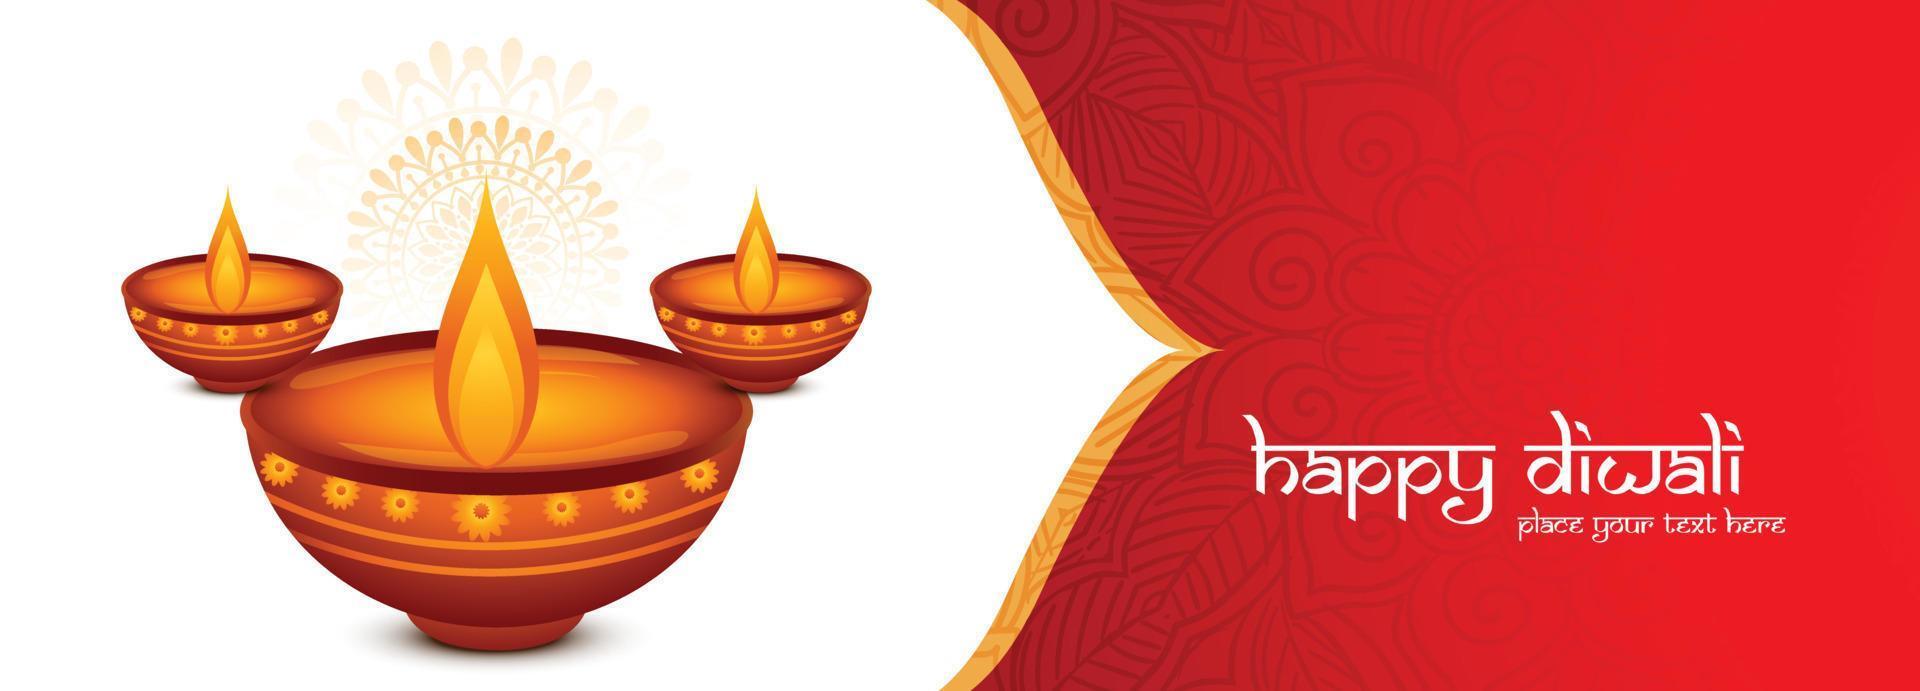 Elegant diwali festival oil lamp celebration banner holiday background vector